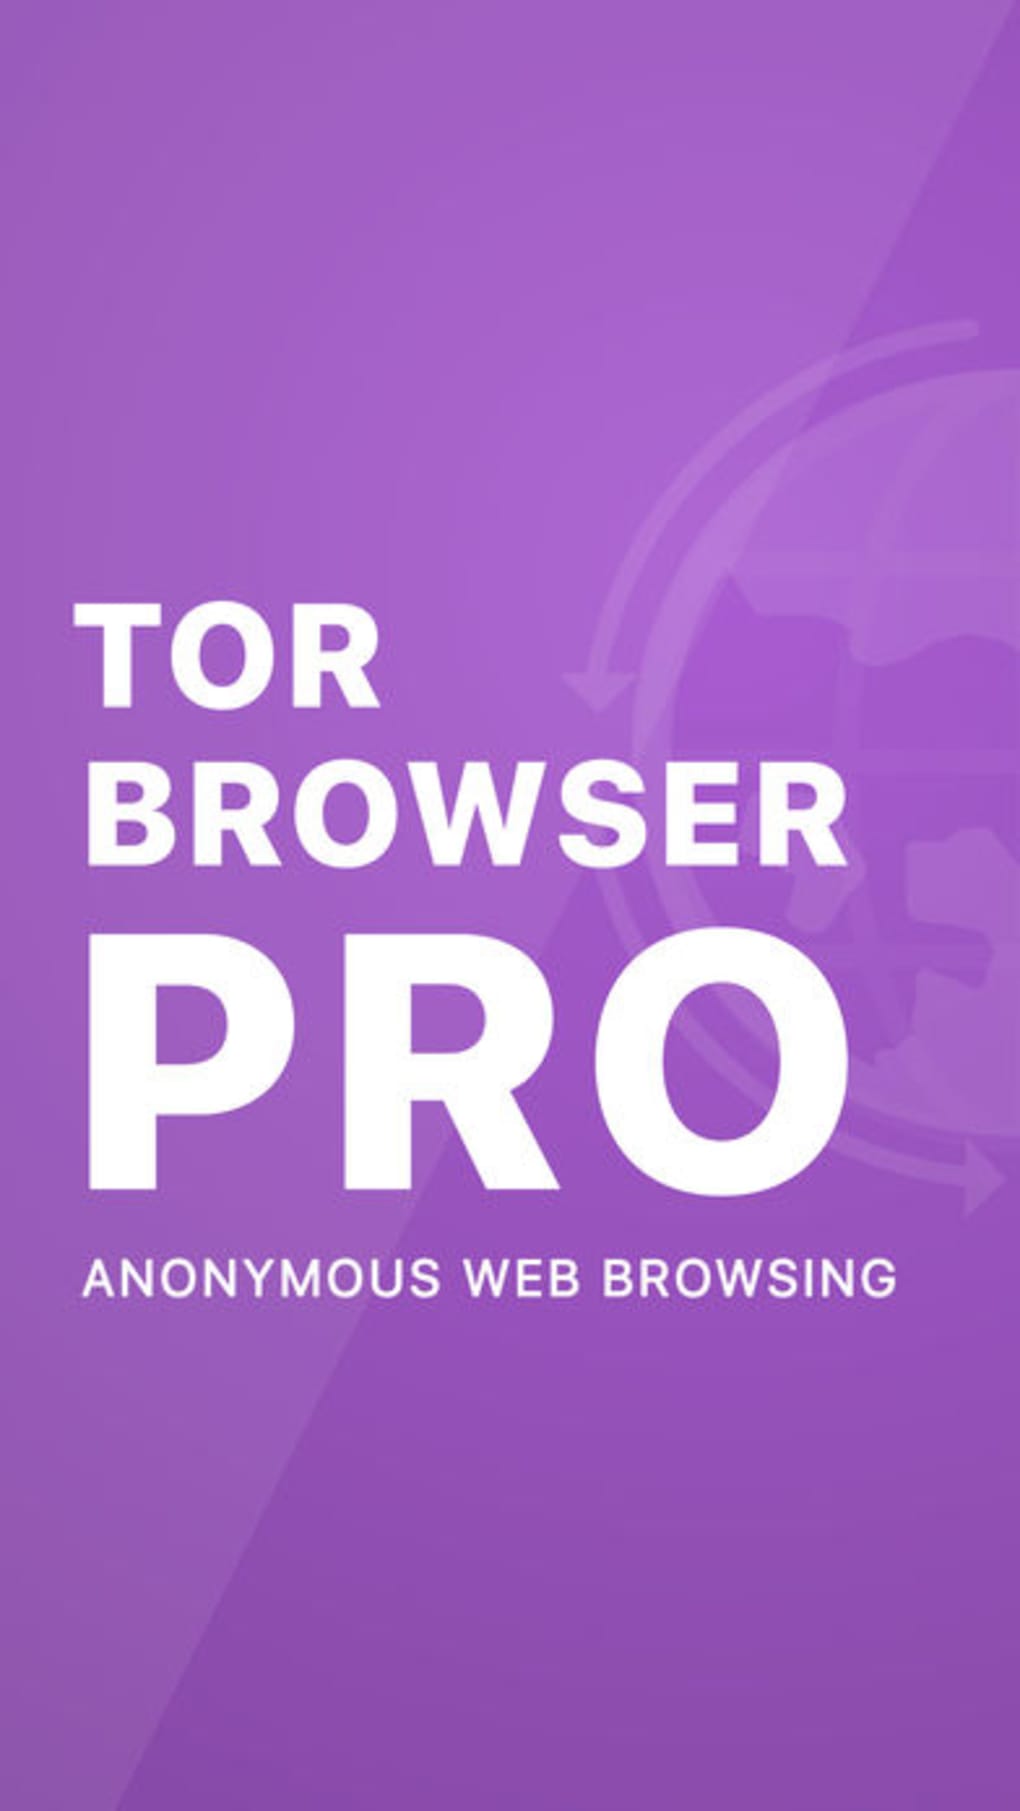 Tor browser на iphone 6s mega тор браузер официальный сайт для виндовс 10 mega